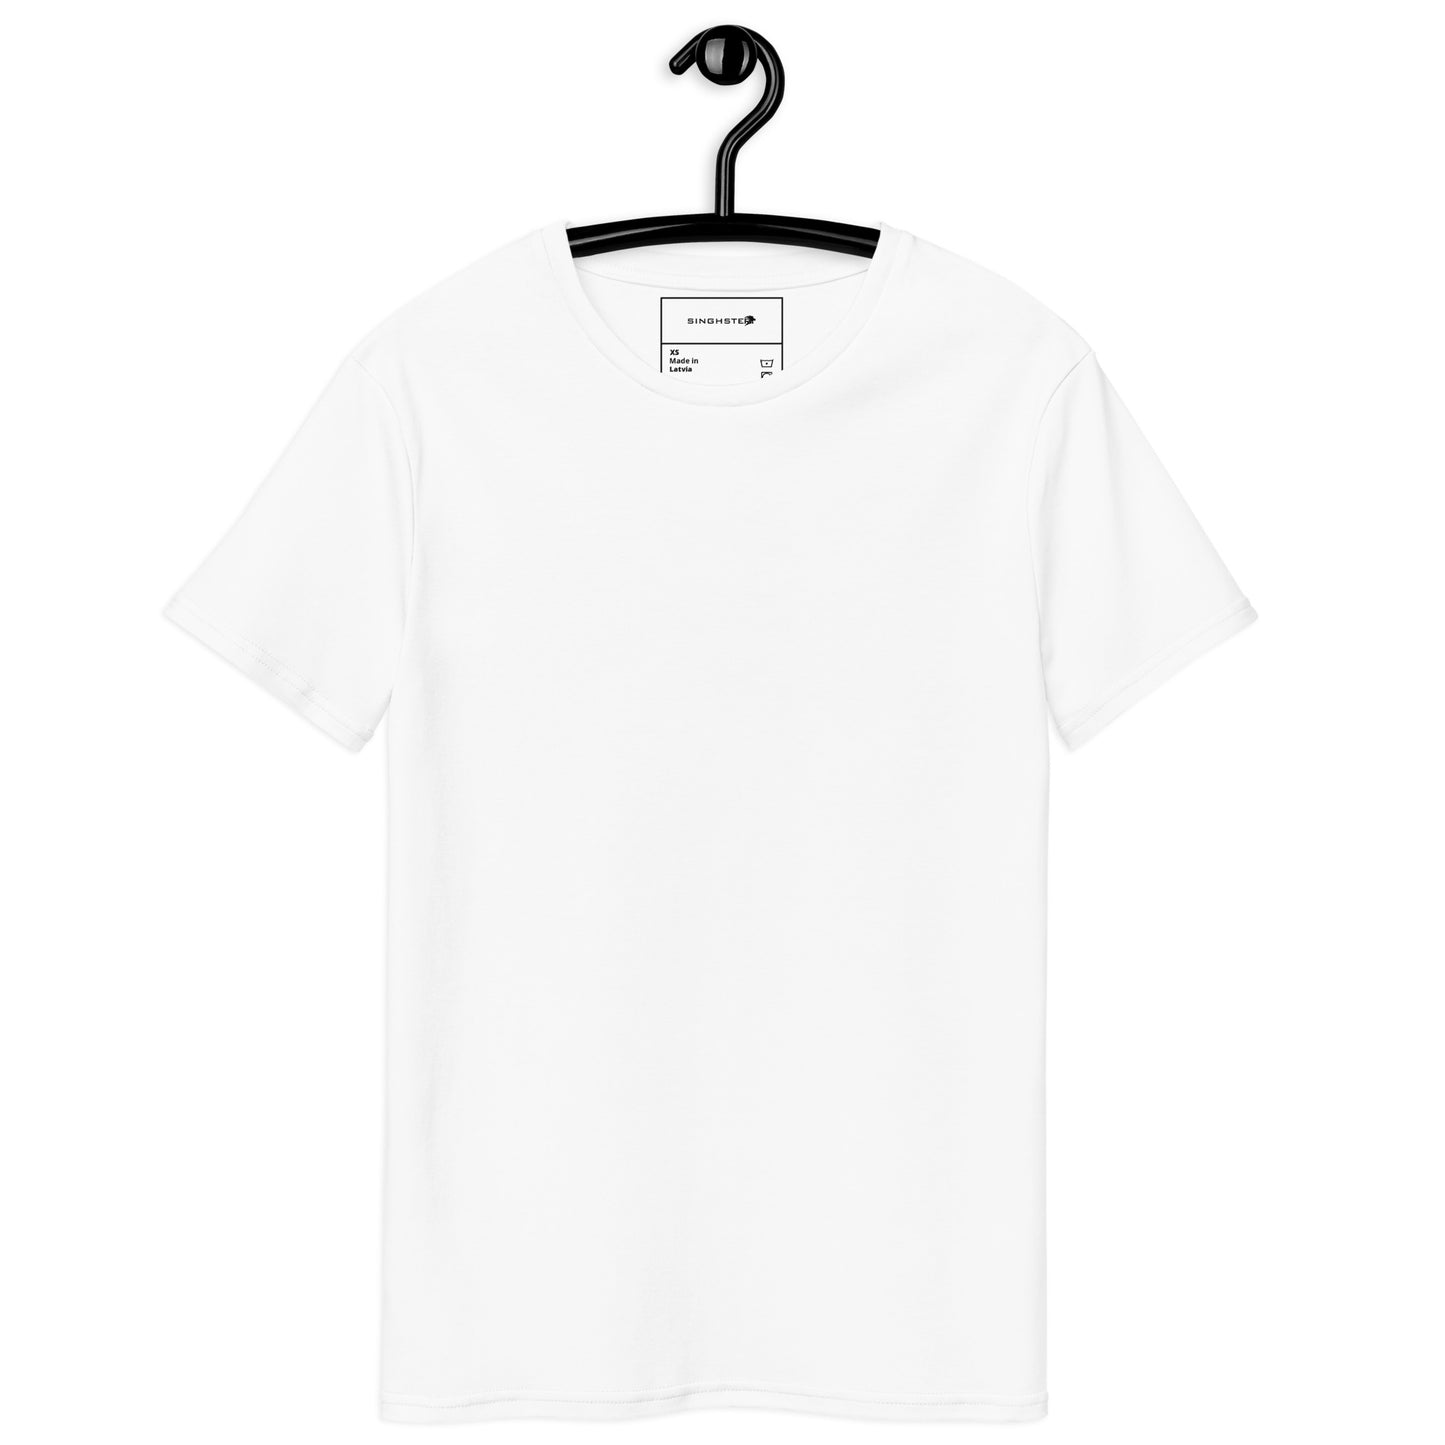 Streetwear Premium Cotton T-shirt